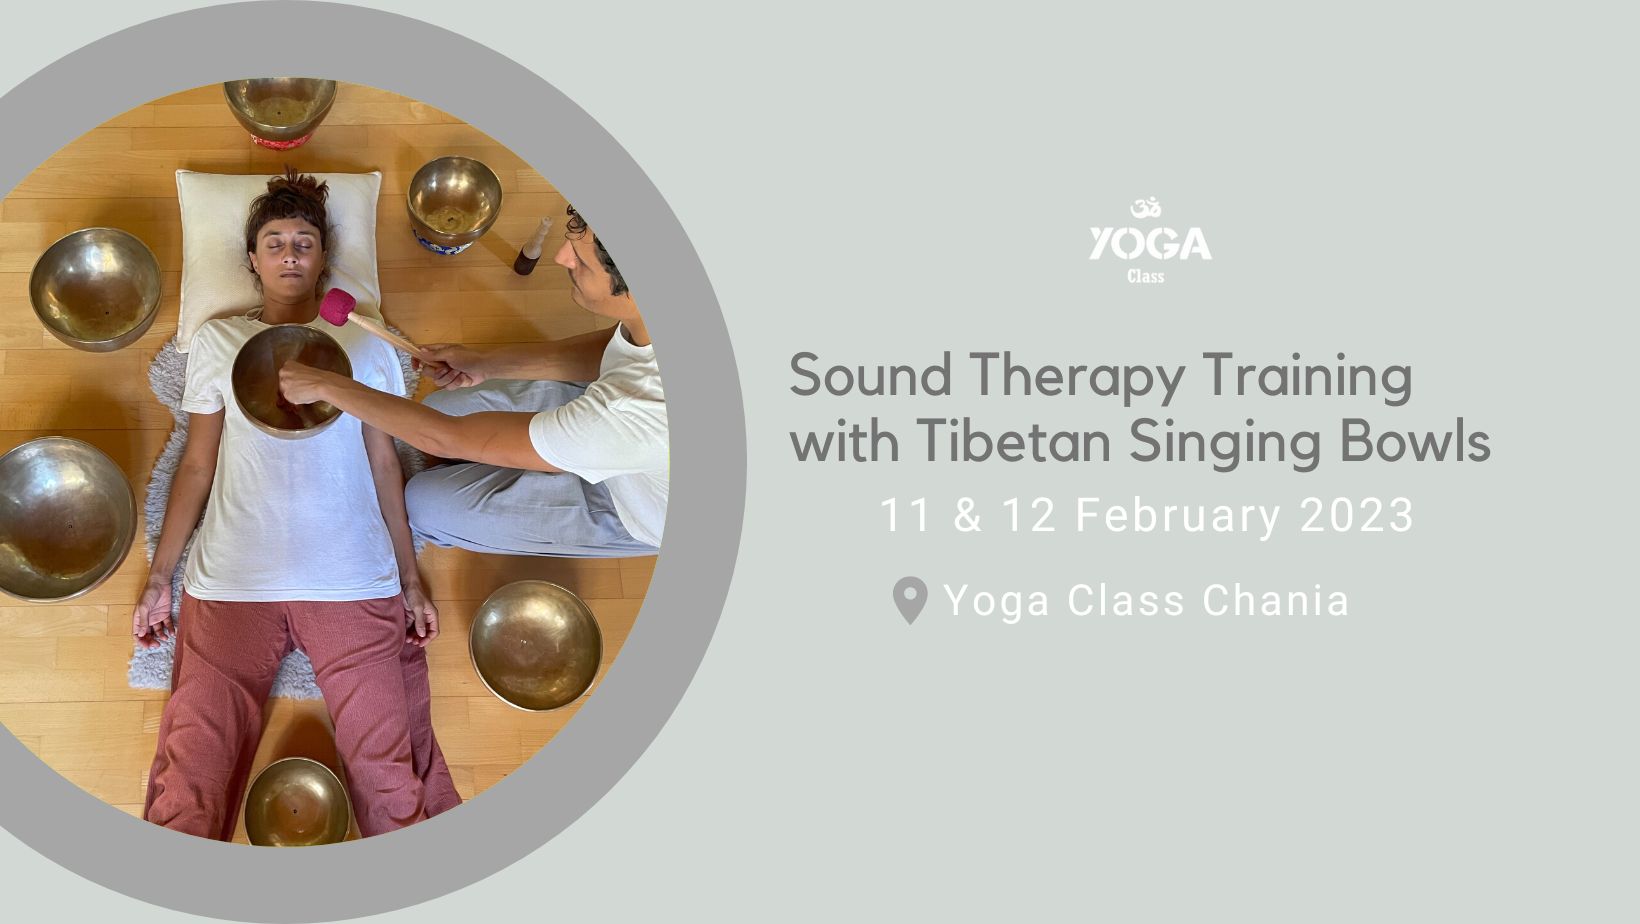 Sound healing training seminar with Tibetan singing bowls in Chania - February 2023